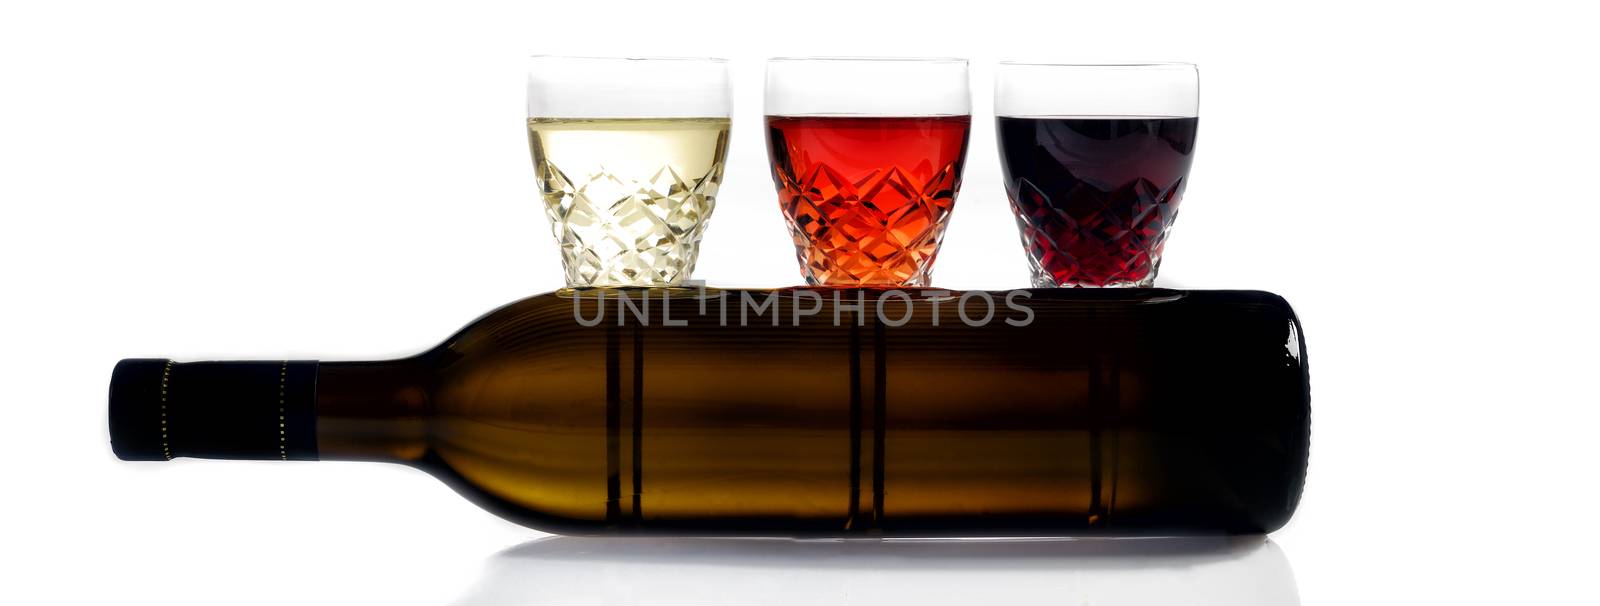 Three glasses of wine, glass, white wine, red wine, rose wine, white background, bottle of wine by jalonsohu@gmail.com